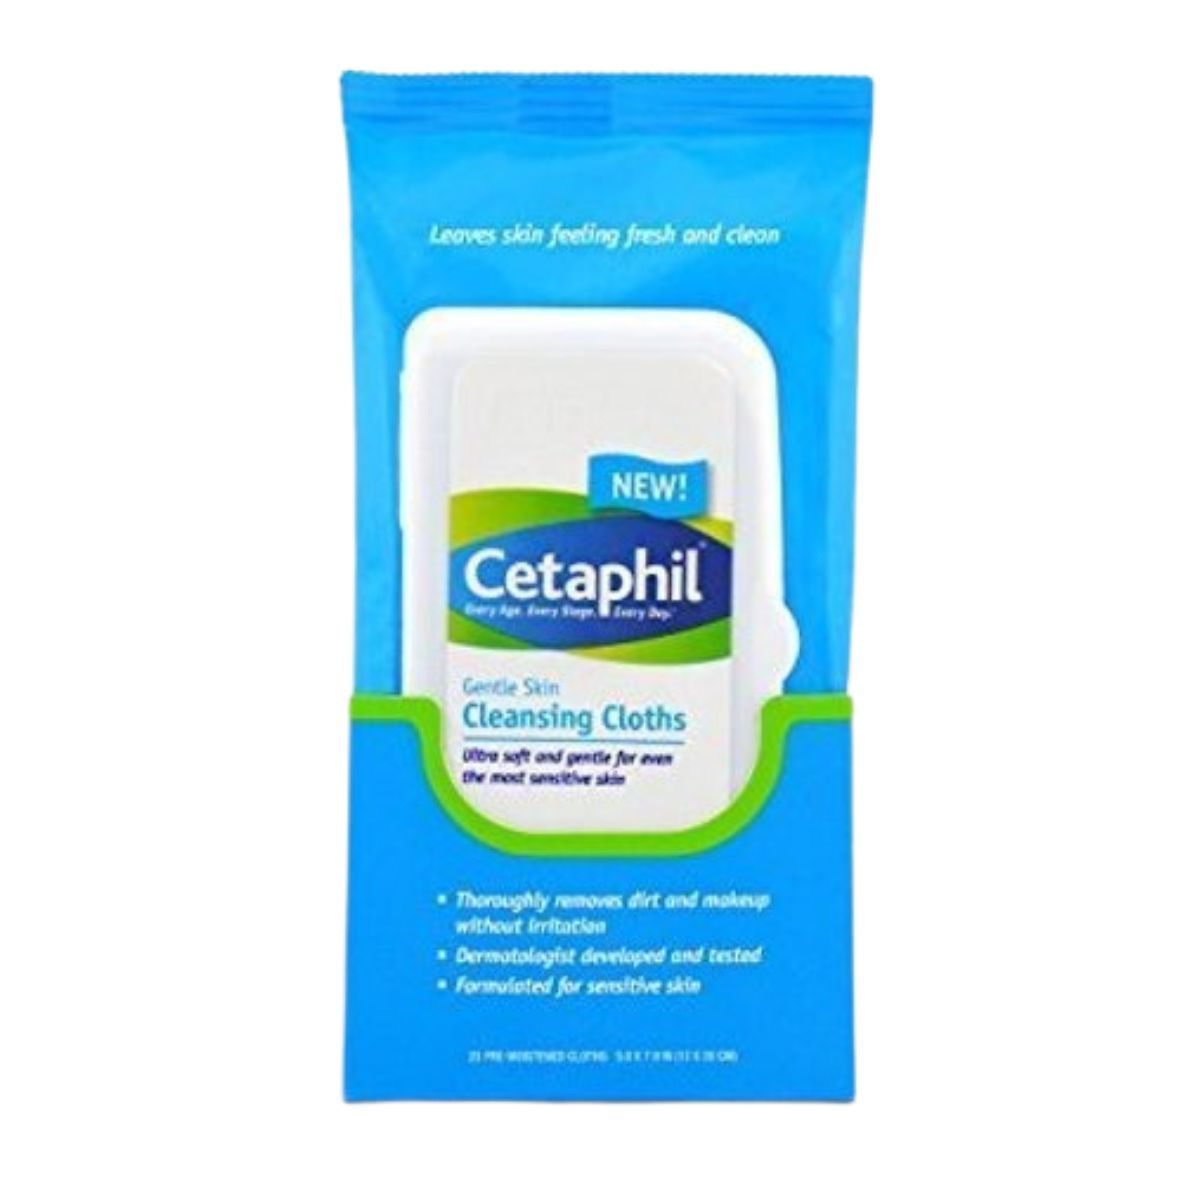 Gentle Skin Cleansing Cloths, 2-pack